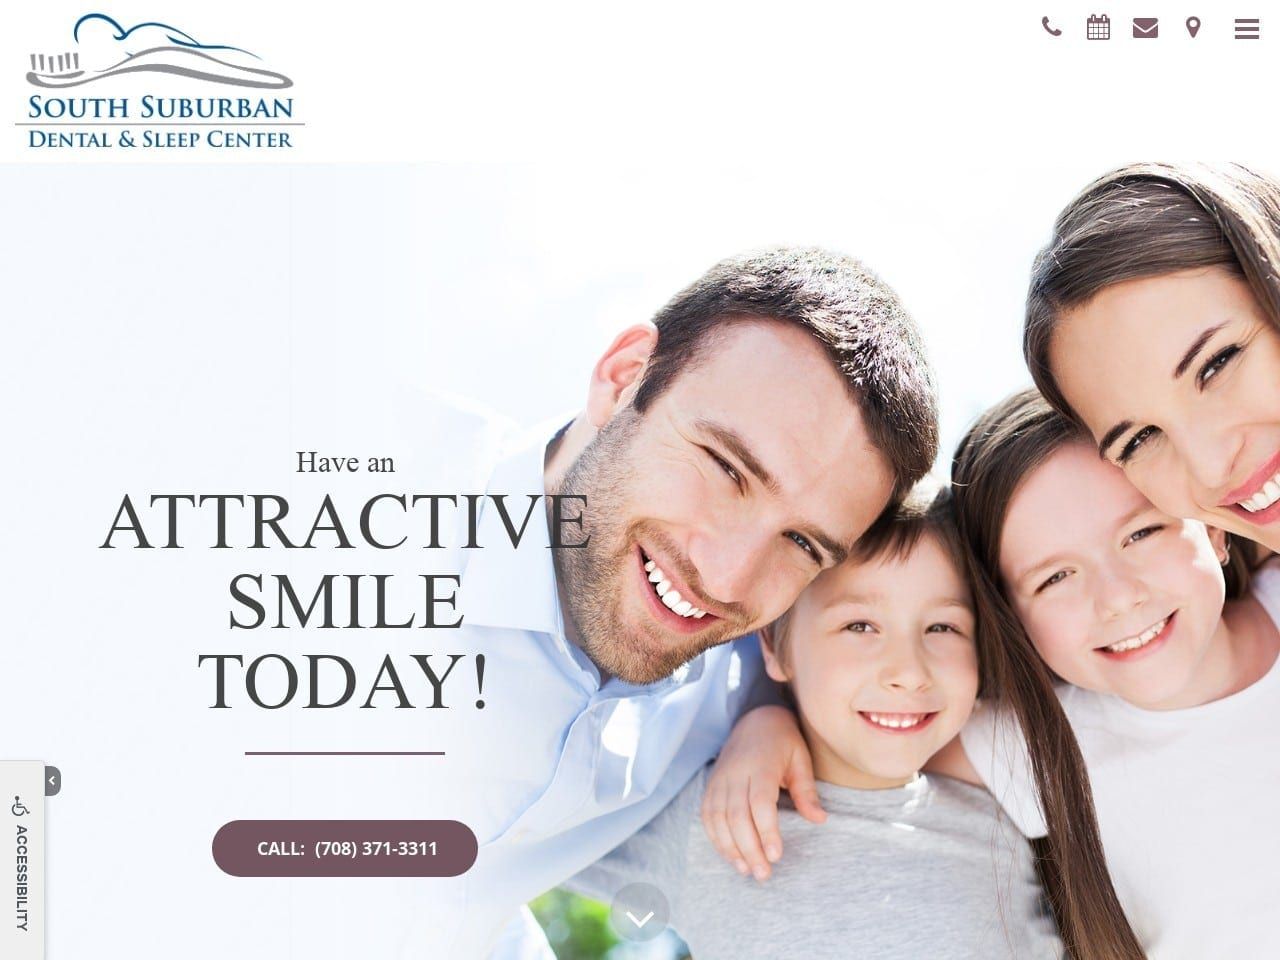 South Suburban Family Dental Mark Anderson DDS Website Screenshot from ssfamilydental.com